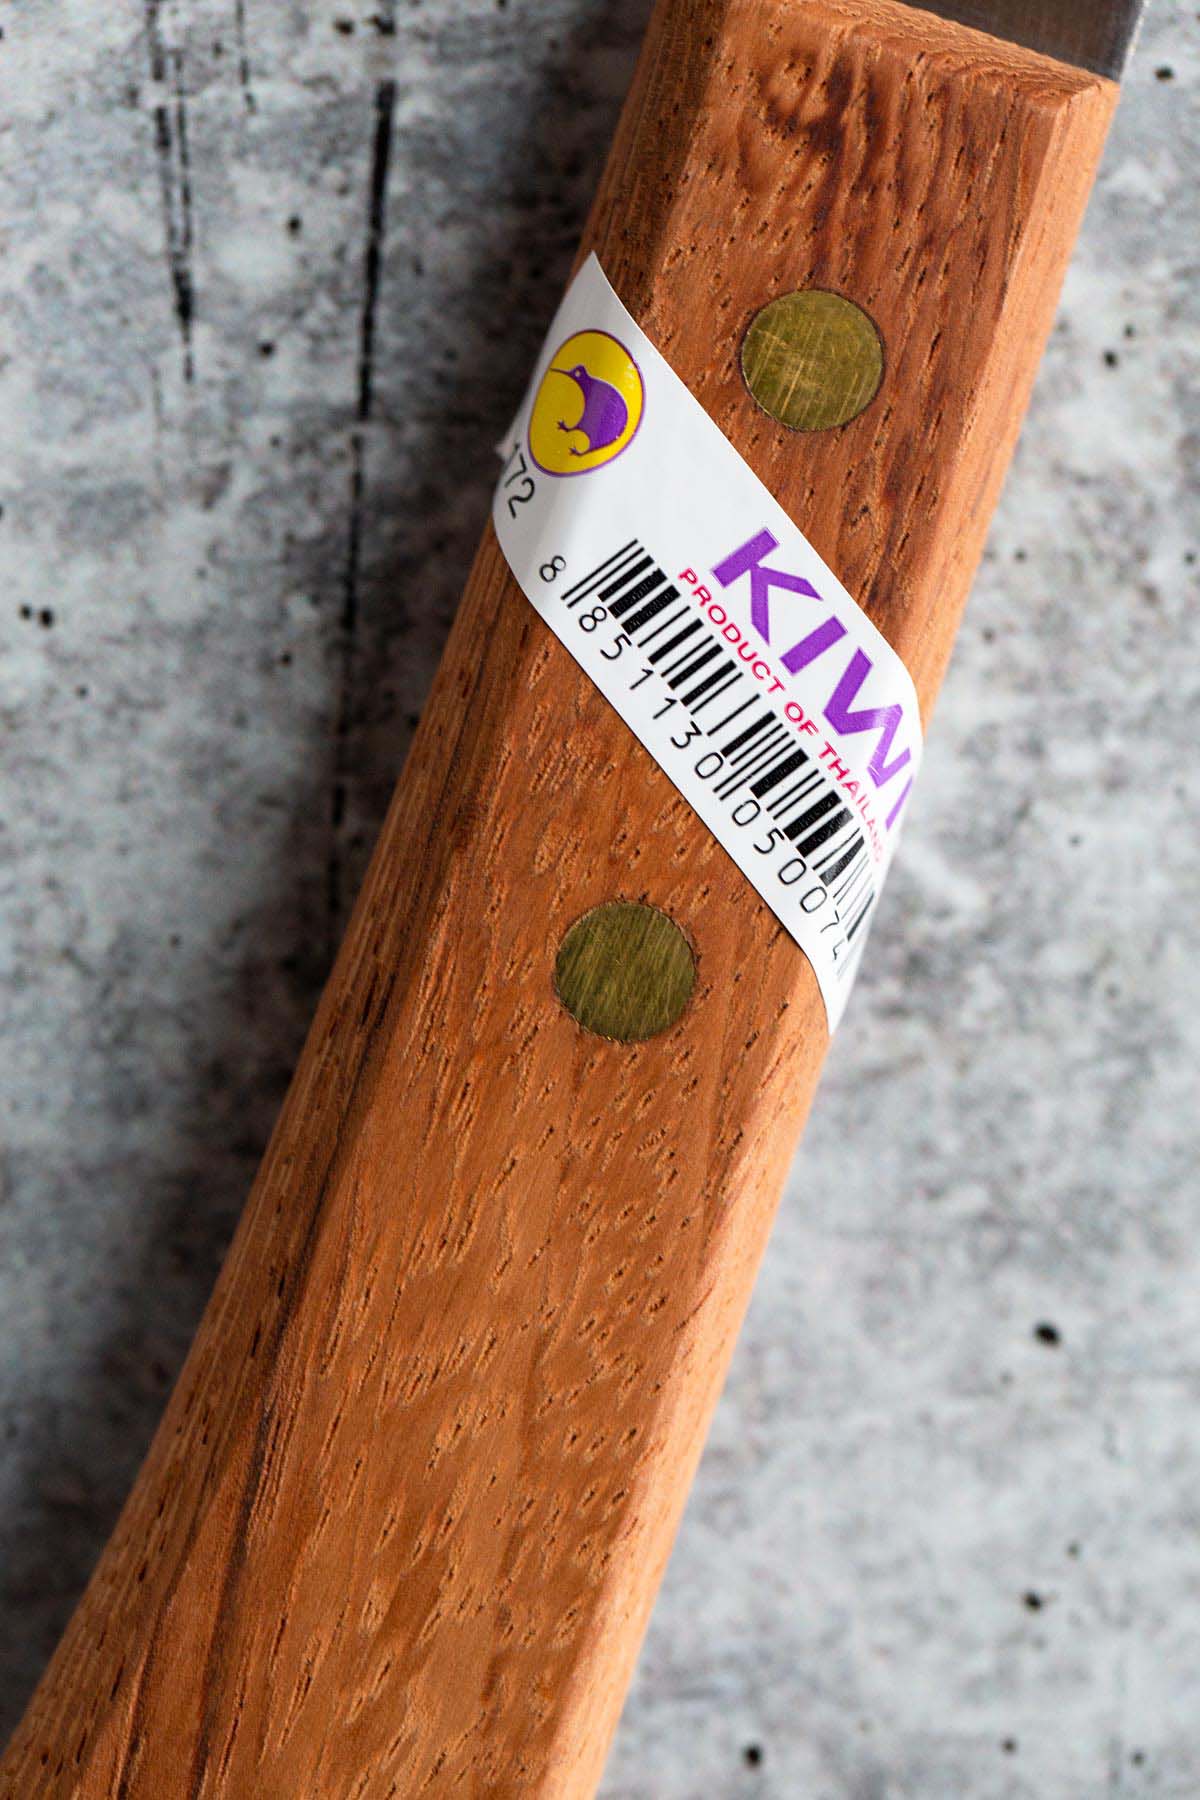 Kiwi knife sticker on handle